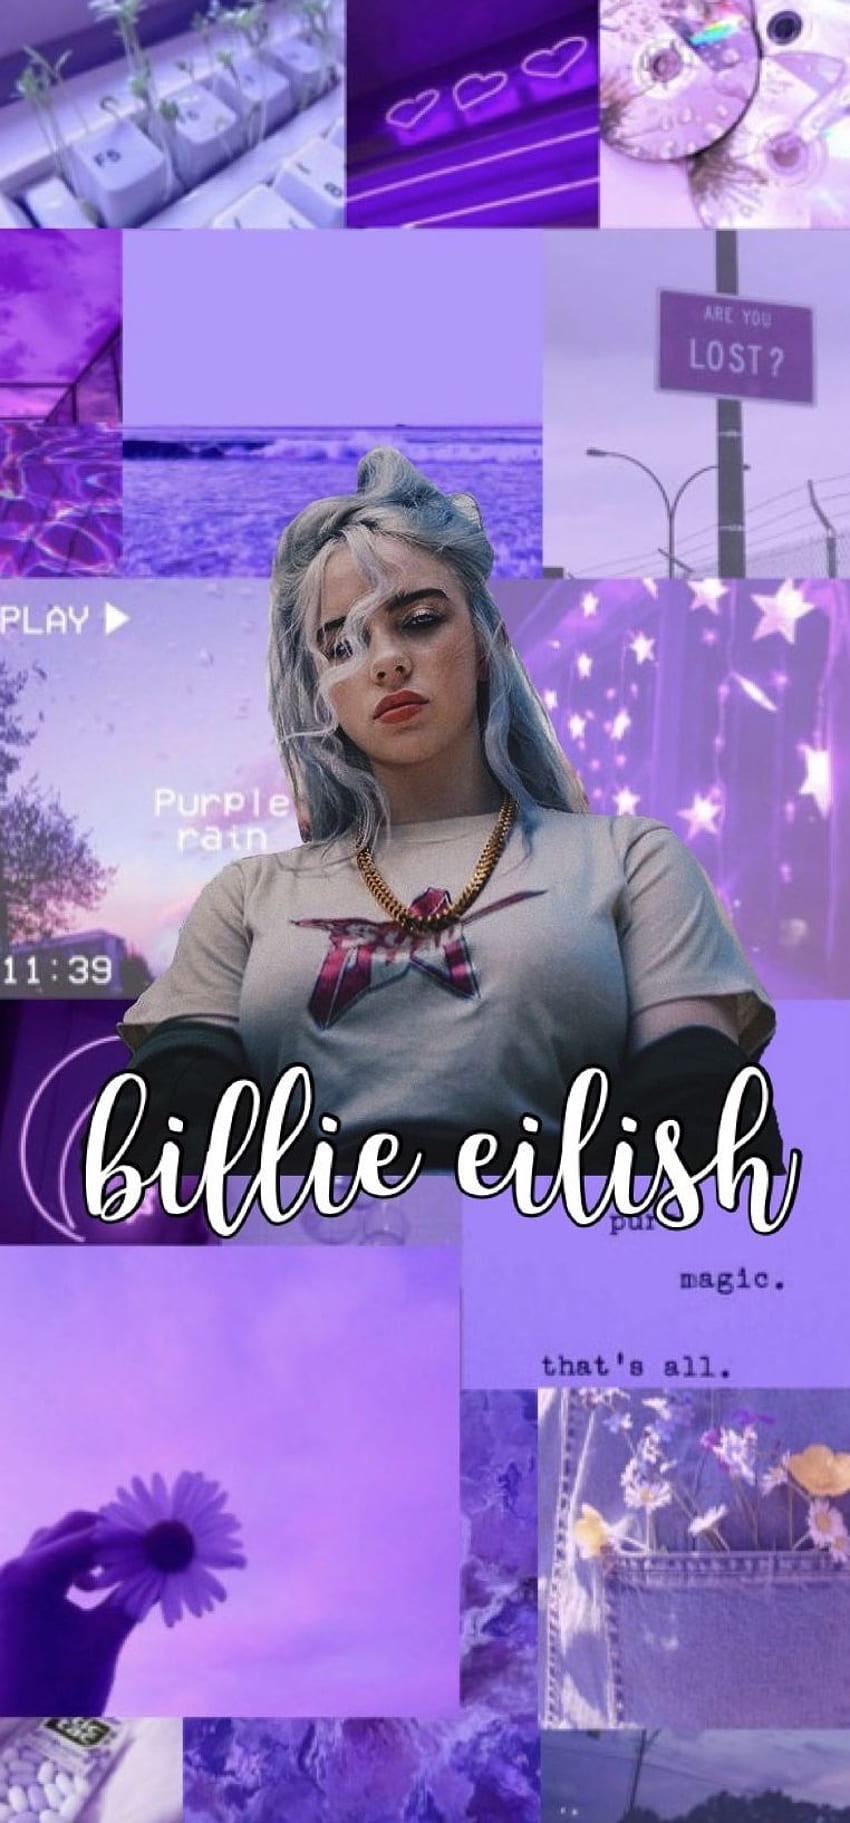 Billie eilish aesthetic wallpaper background purple that's okay - Billie Eilish